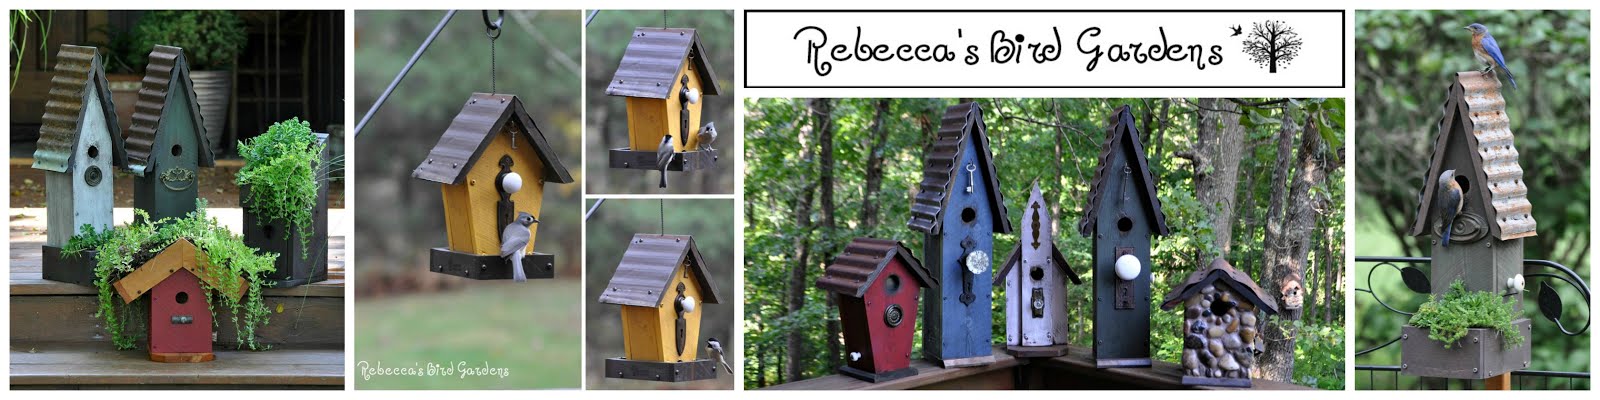 Rebecca's Bird Gardens Blog